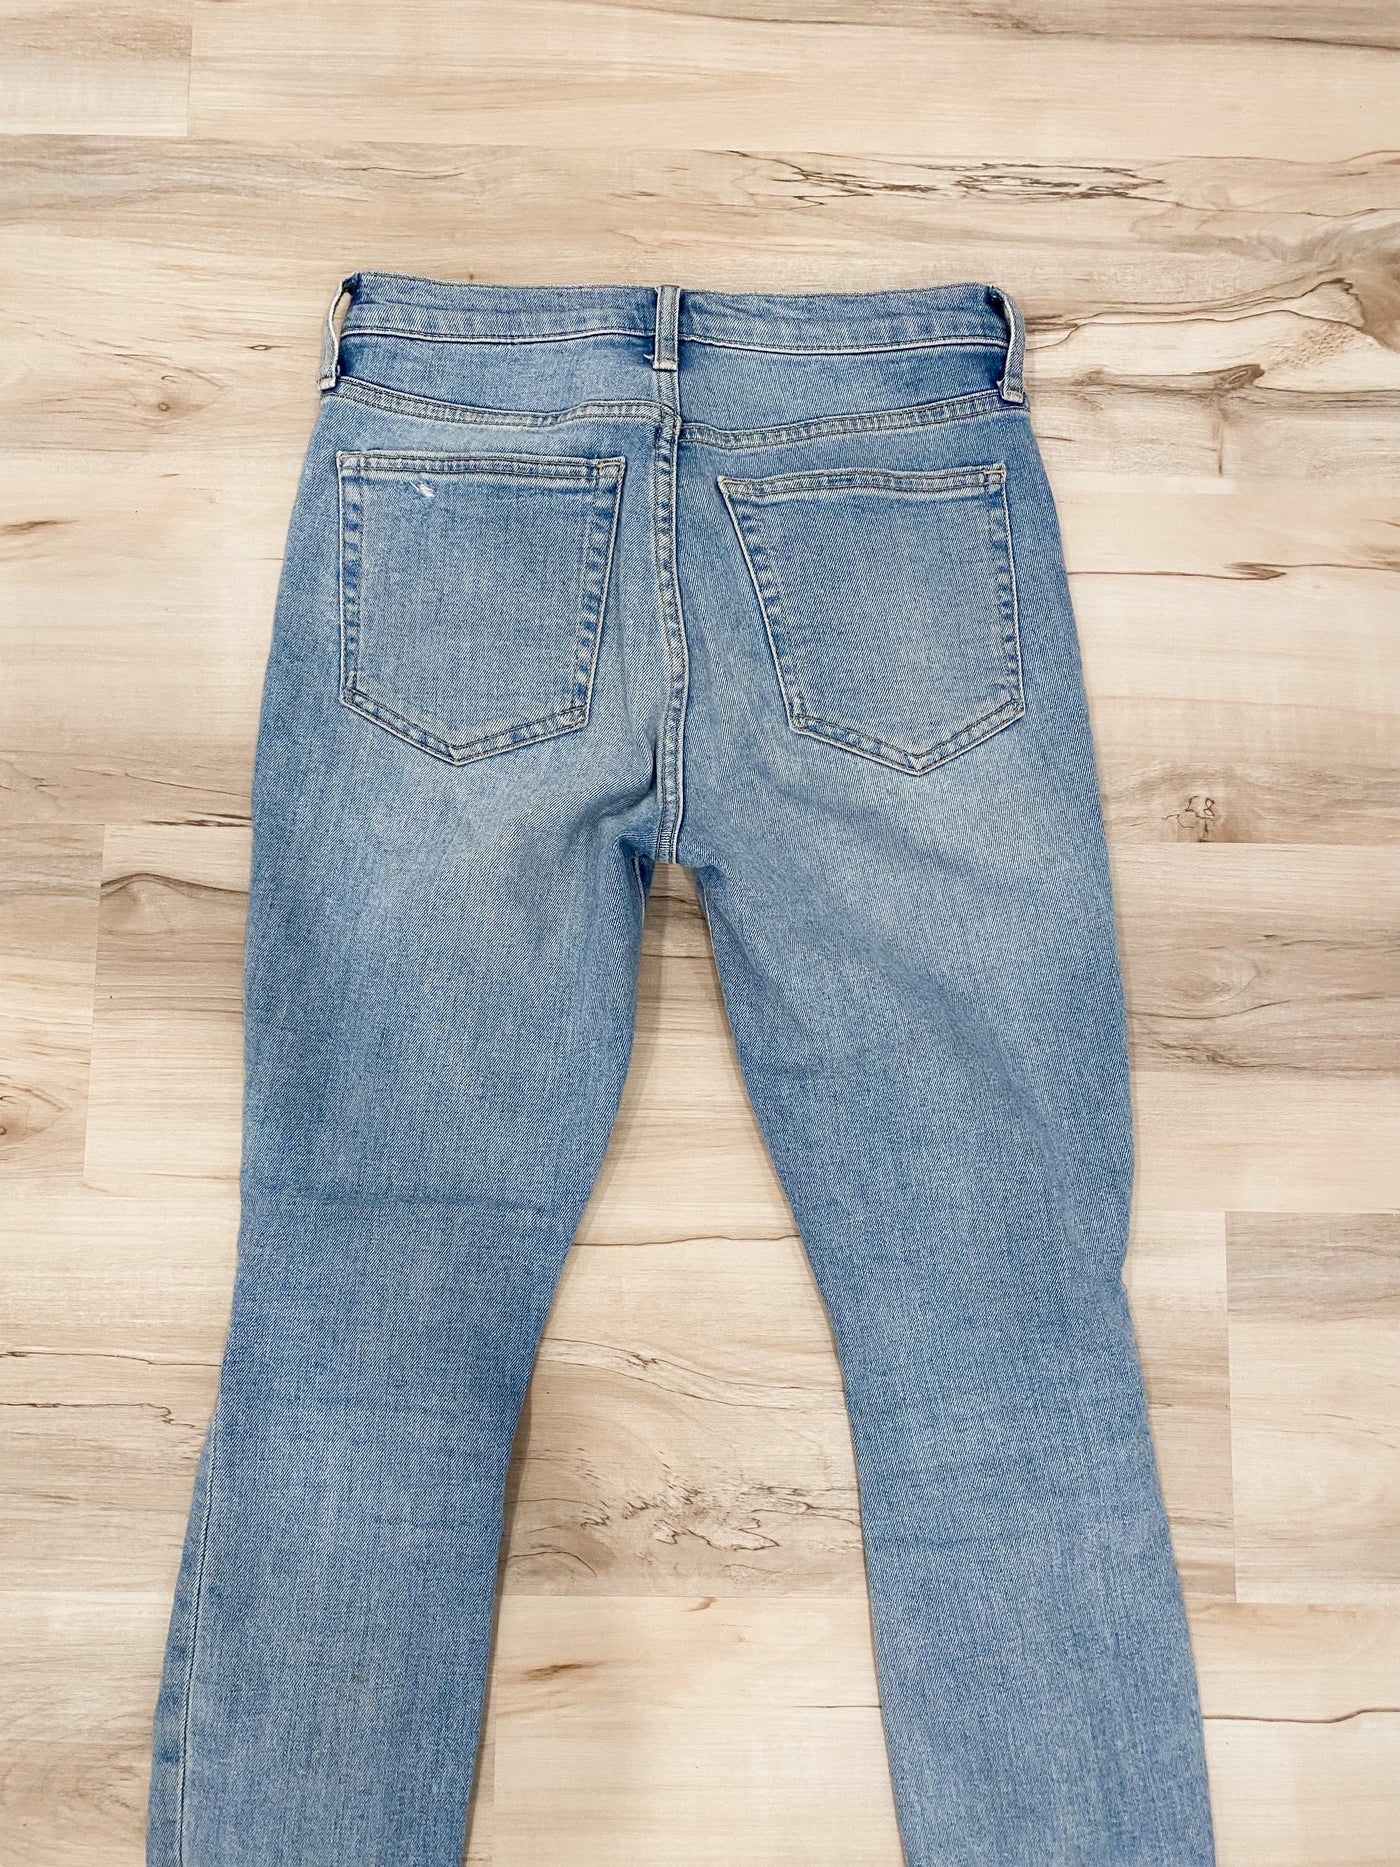 GAP true skinny distressed jeans